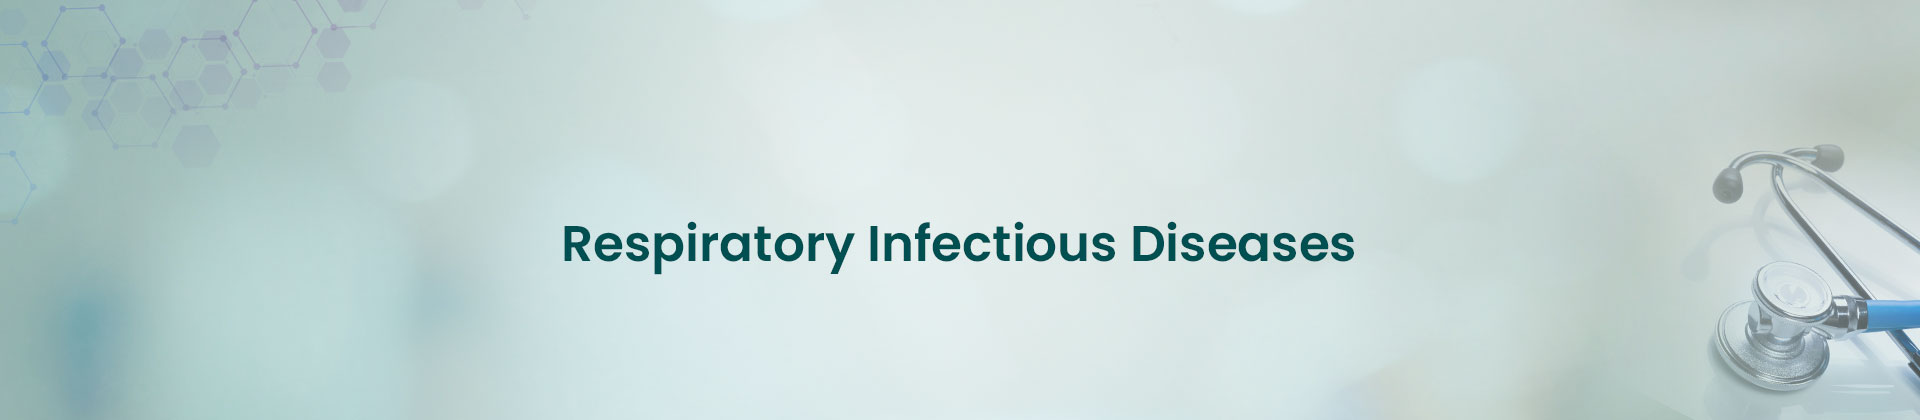 Respiratory Infectious Diseases